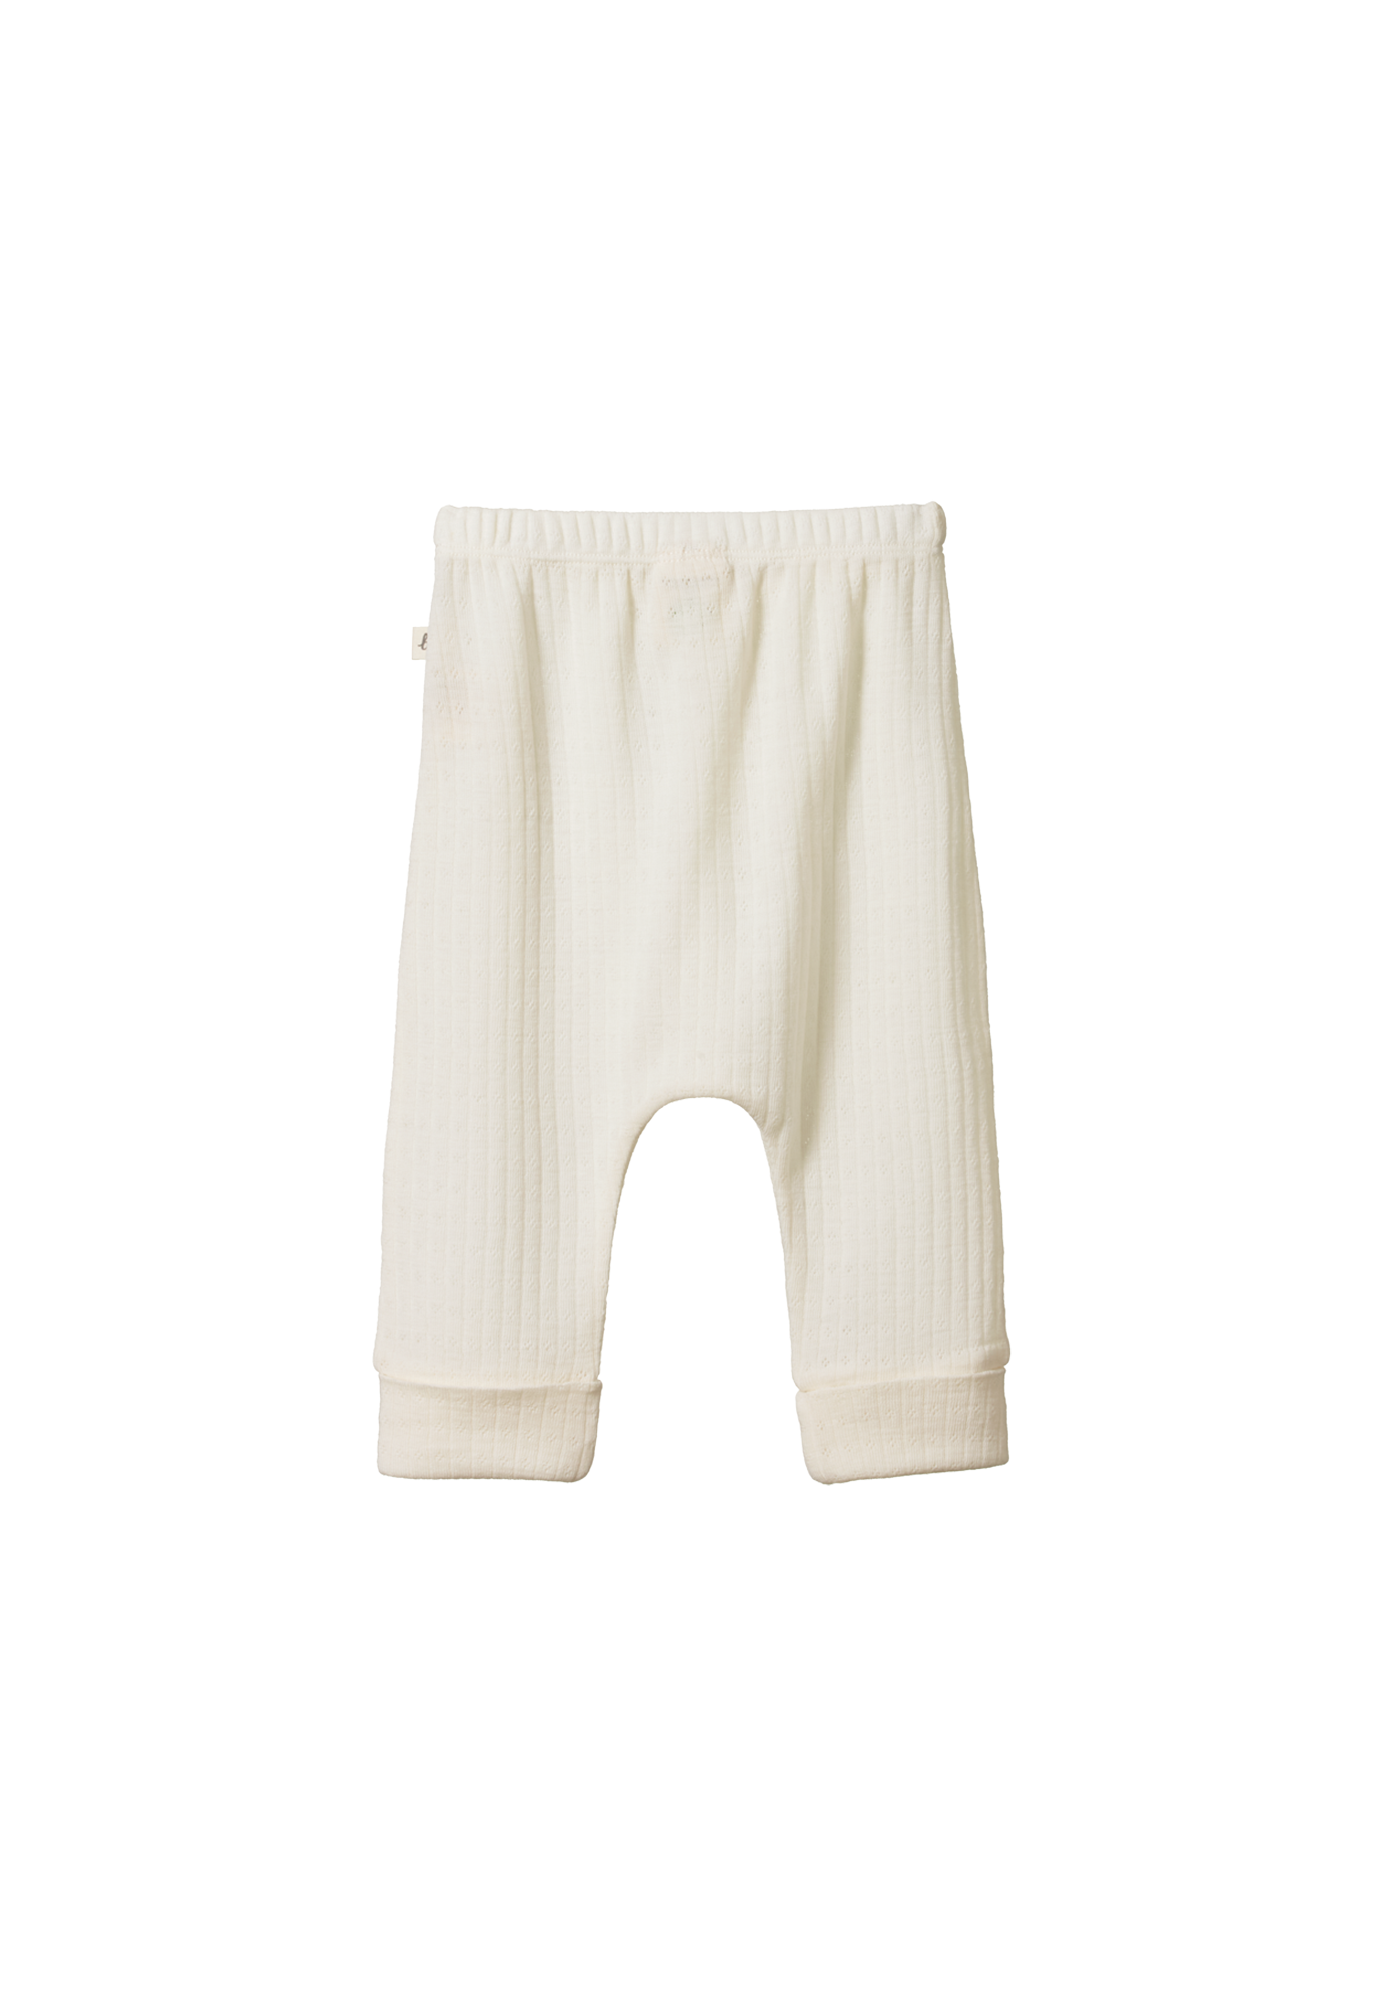 Boys Linen Pants Natural Linen Trousers Drawstring Pants Baby - Etsy